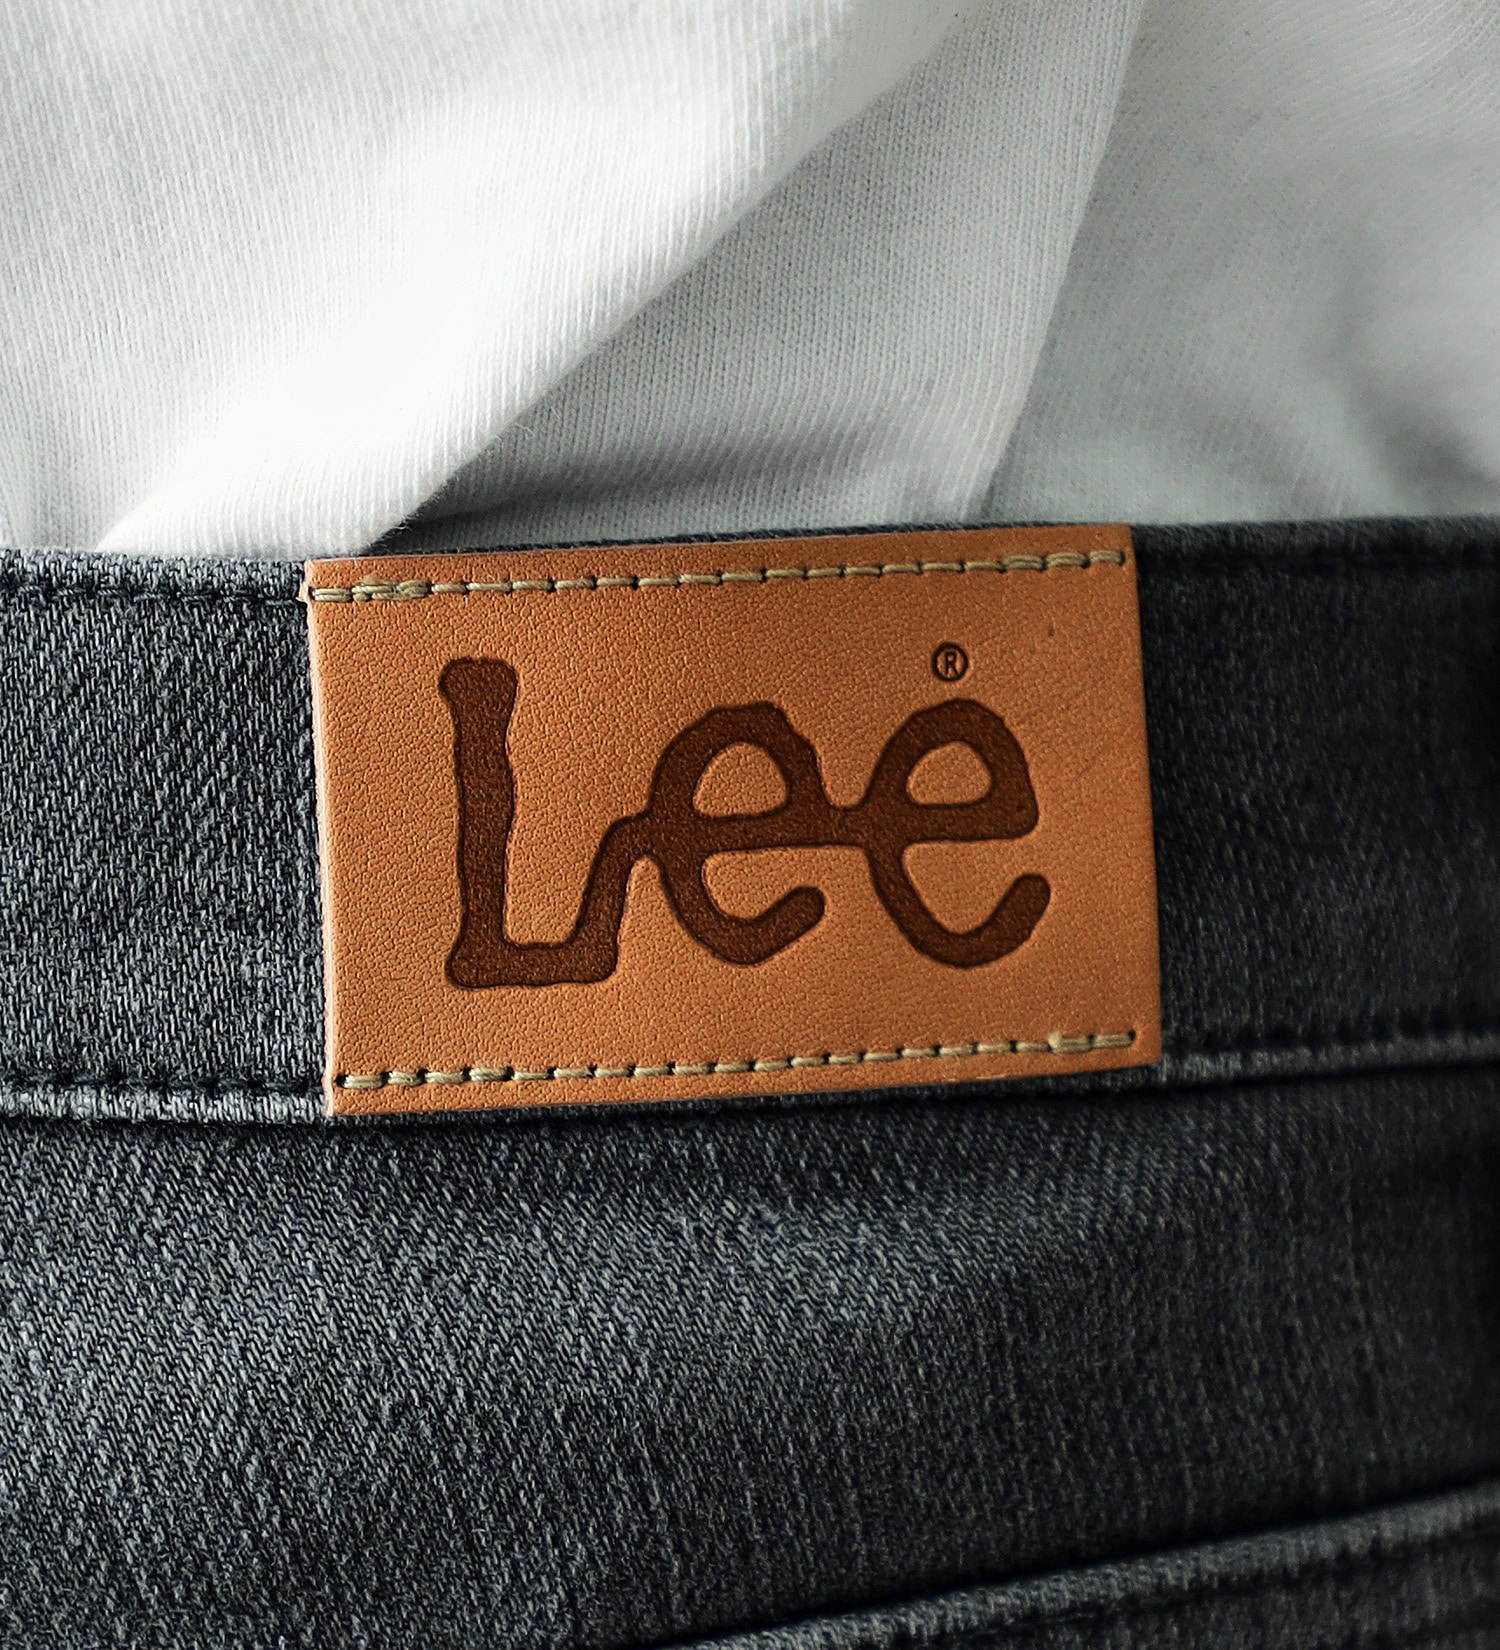 Lee(リー)の【超快適ストレッチ】すっきり細身スキニーパンツ|パンツ/デニムパンツ/メンズ|ブラックデニム